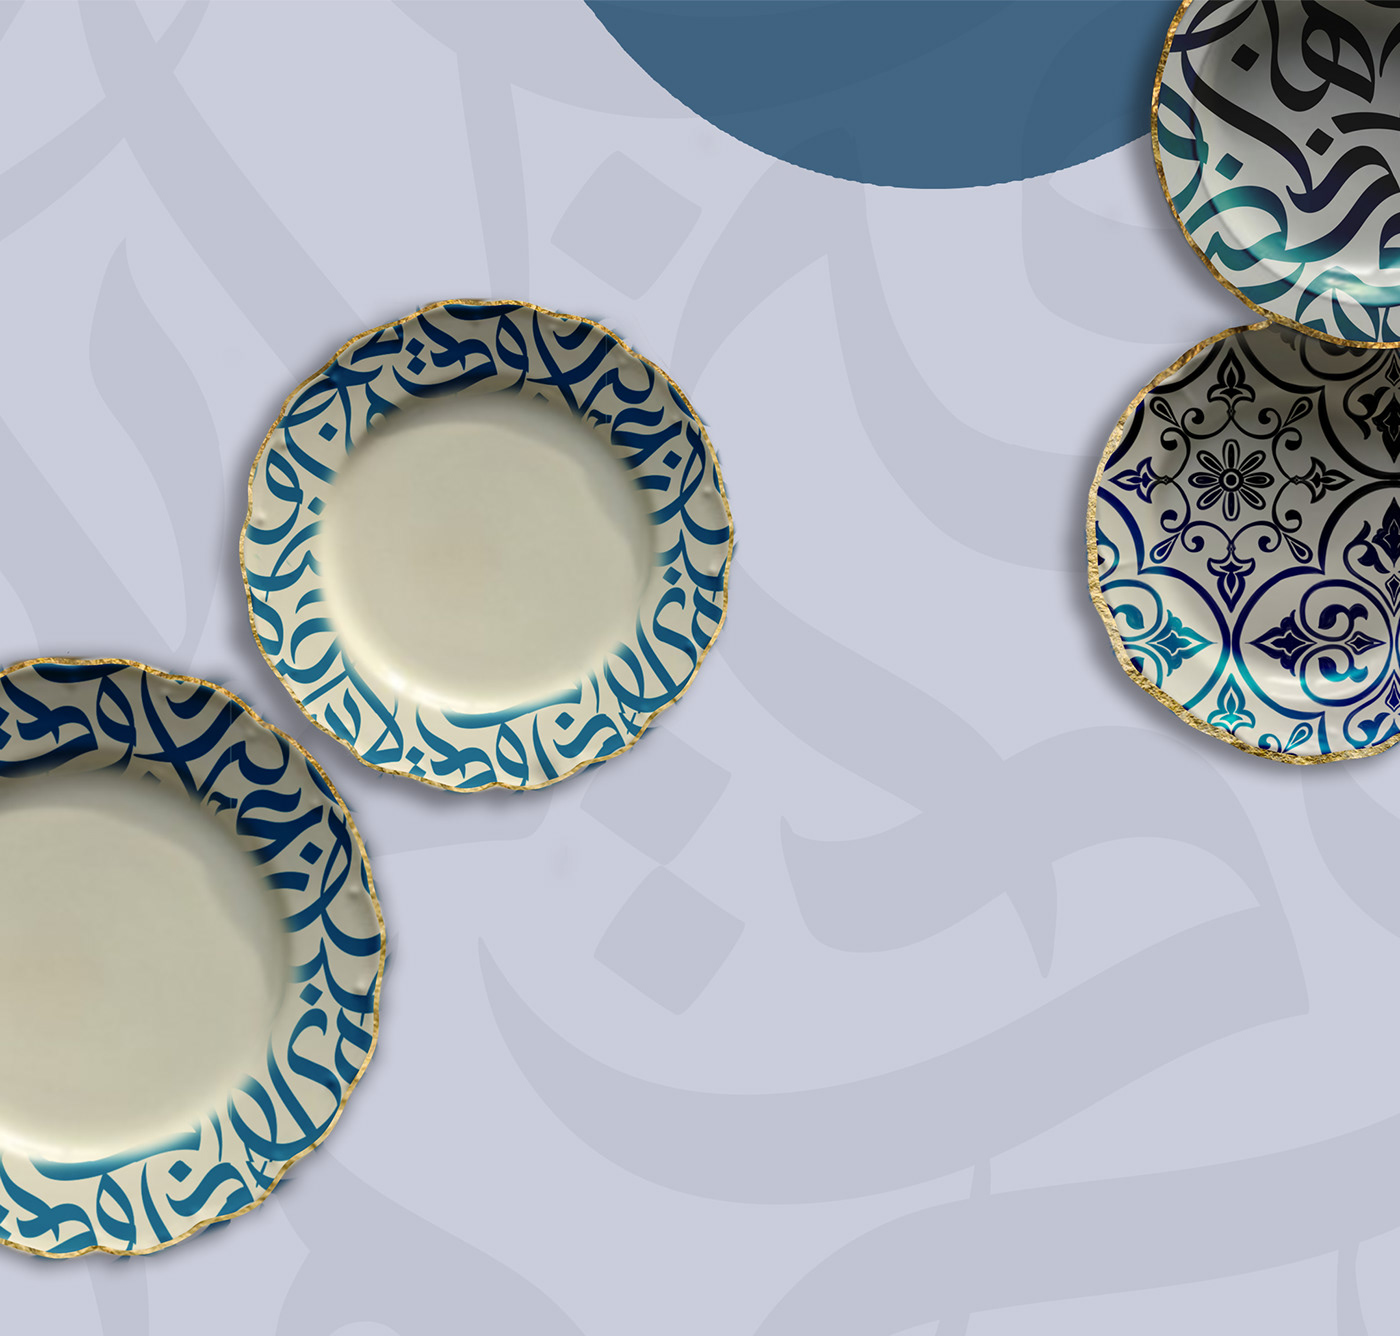 Arabic Calligraphy Tableware Collection 
visit: www.behance.net/jubayerdcd